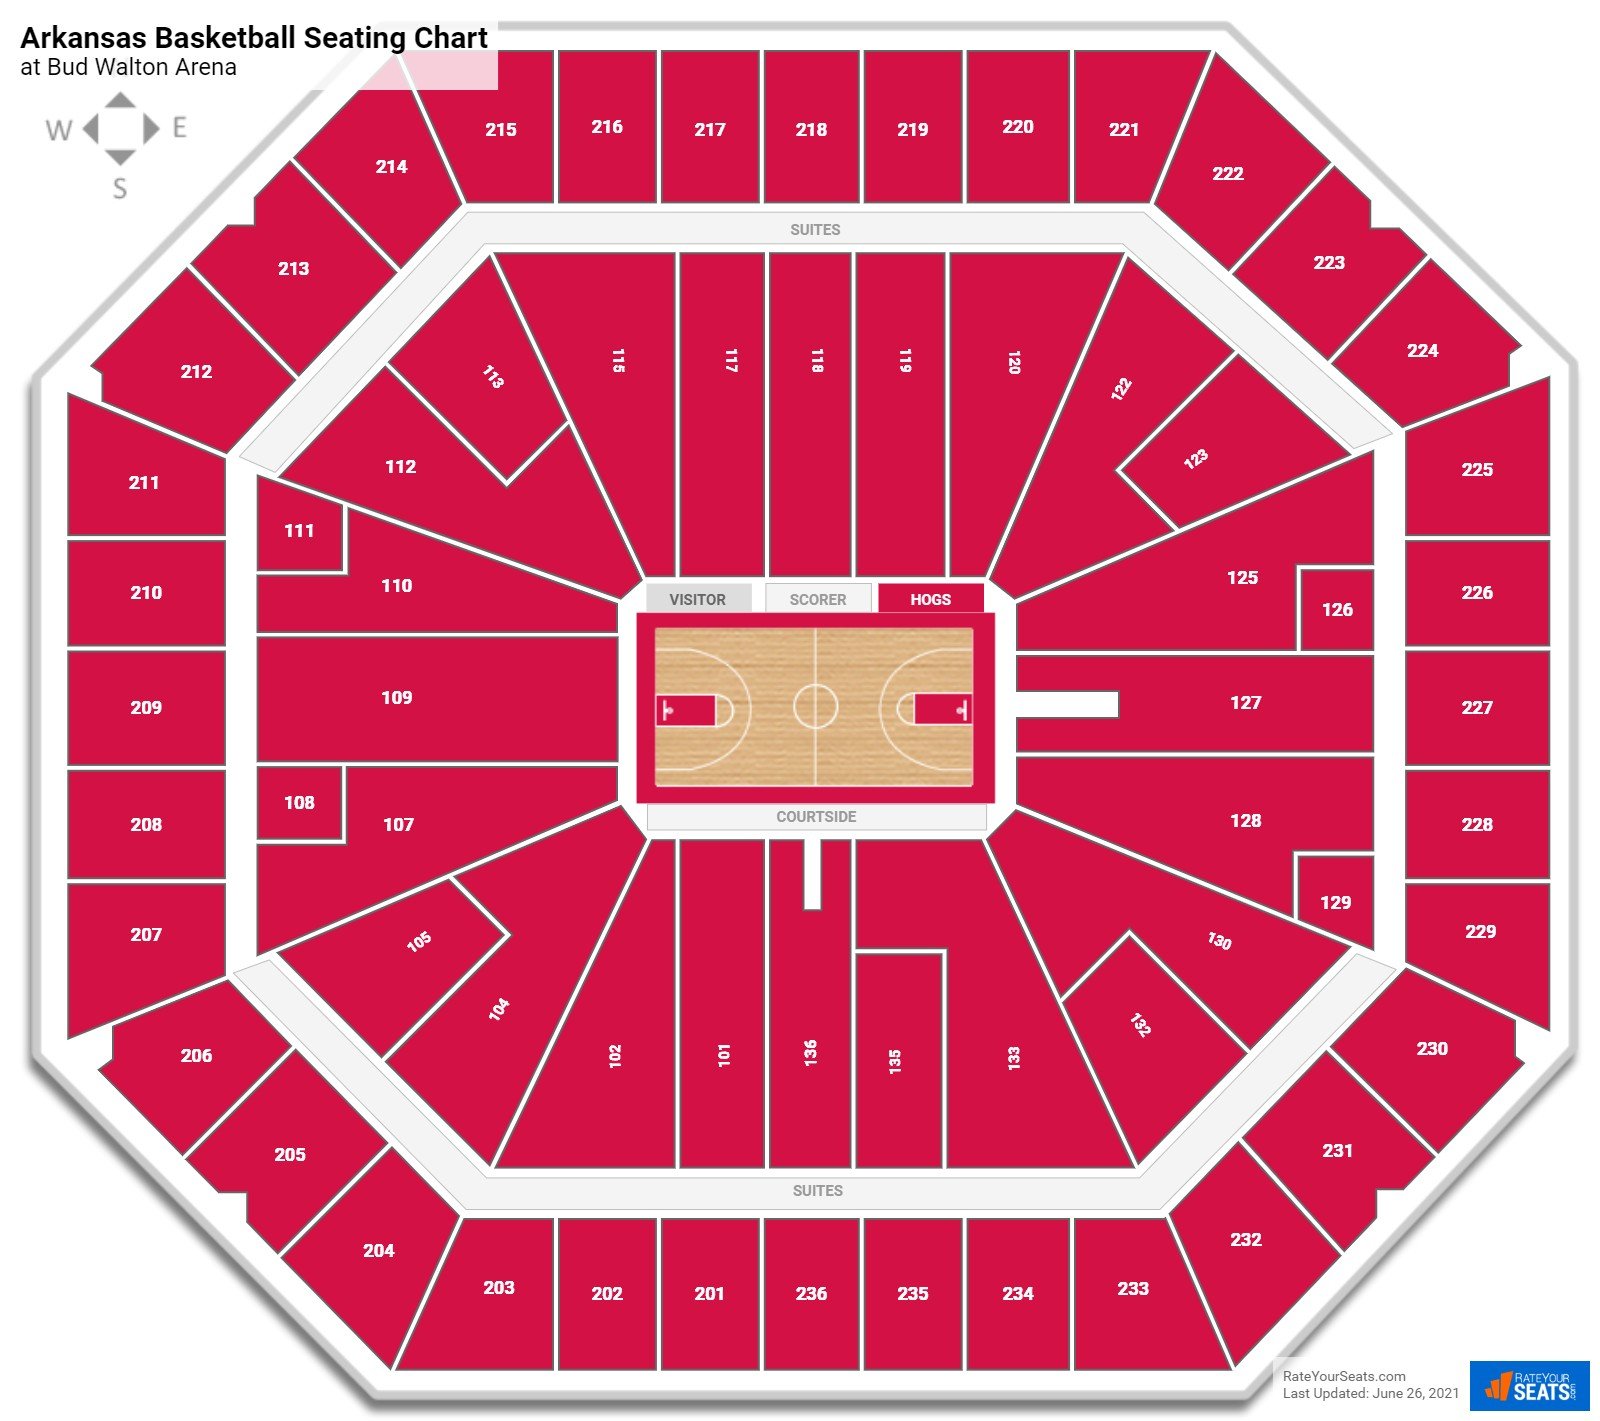 Arkansas Razorbacks Seating Chart at Bud Walton Arena